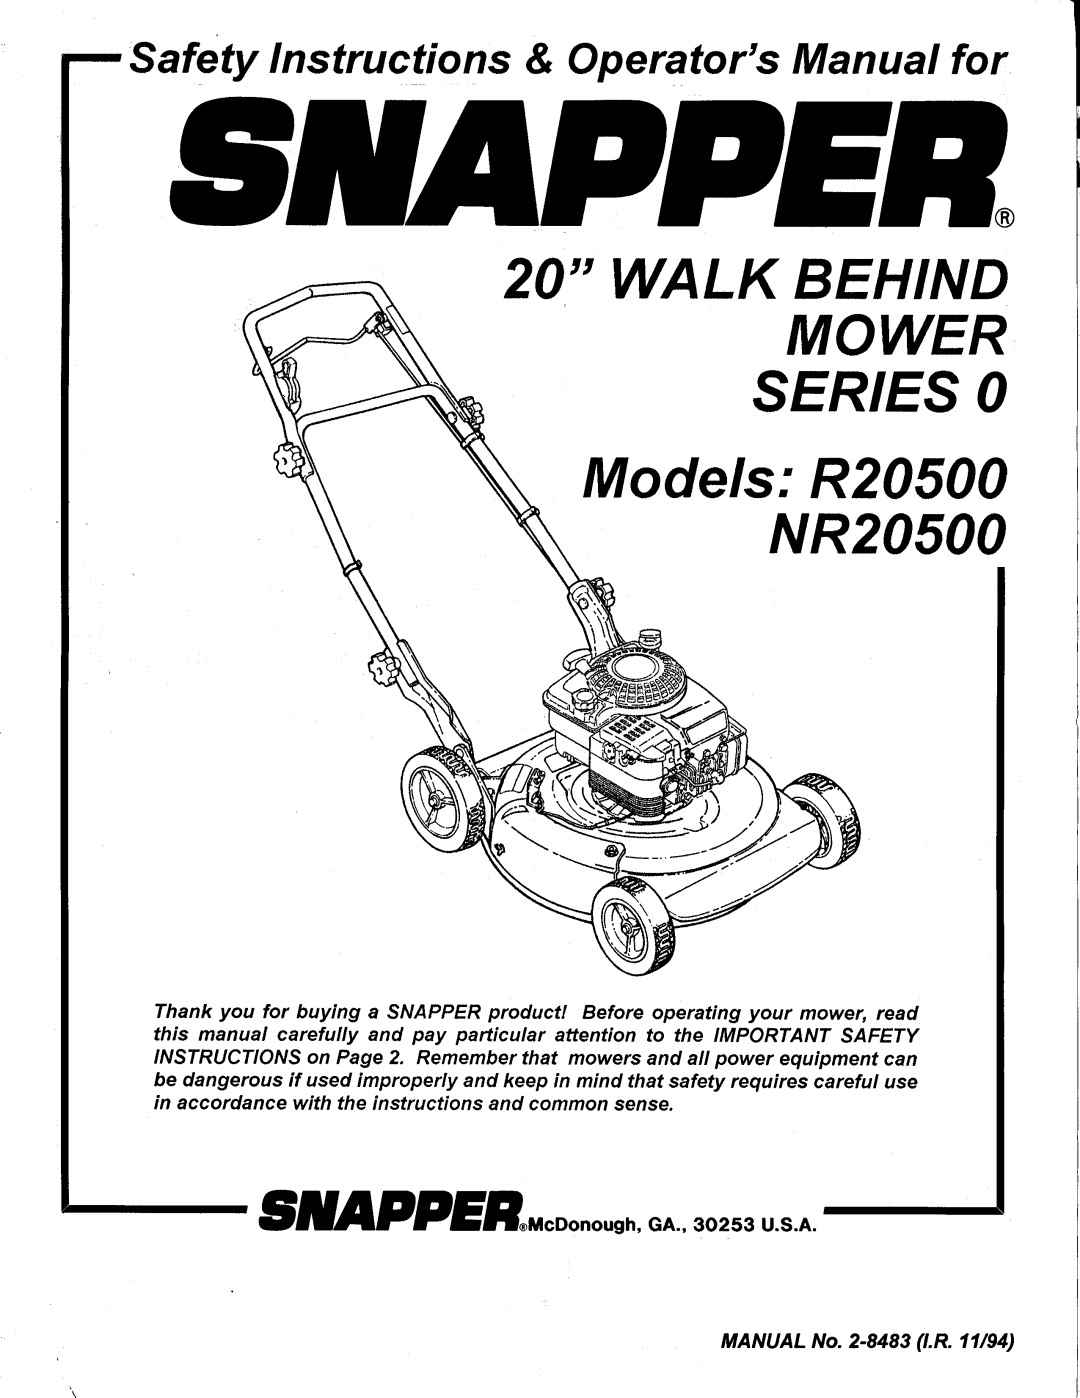 Snapper RP20500, R20500 manual Parts Manual for, STEEL DECK 5 HP PUSH & PROPELLED WALK BEHIND MOWERS SERIES, Manual No 